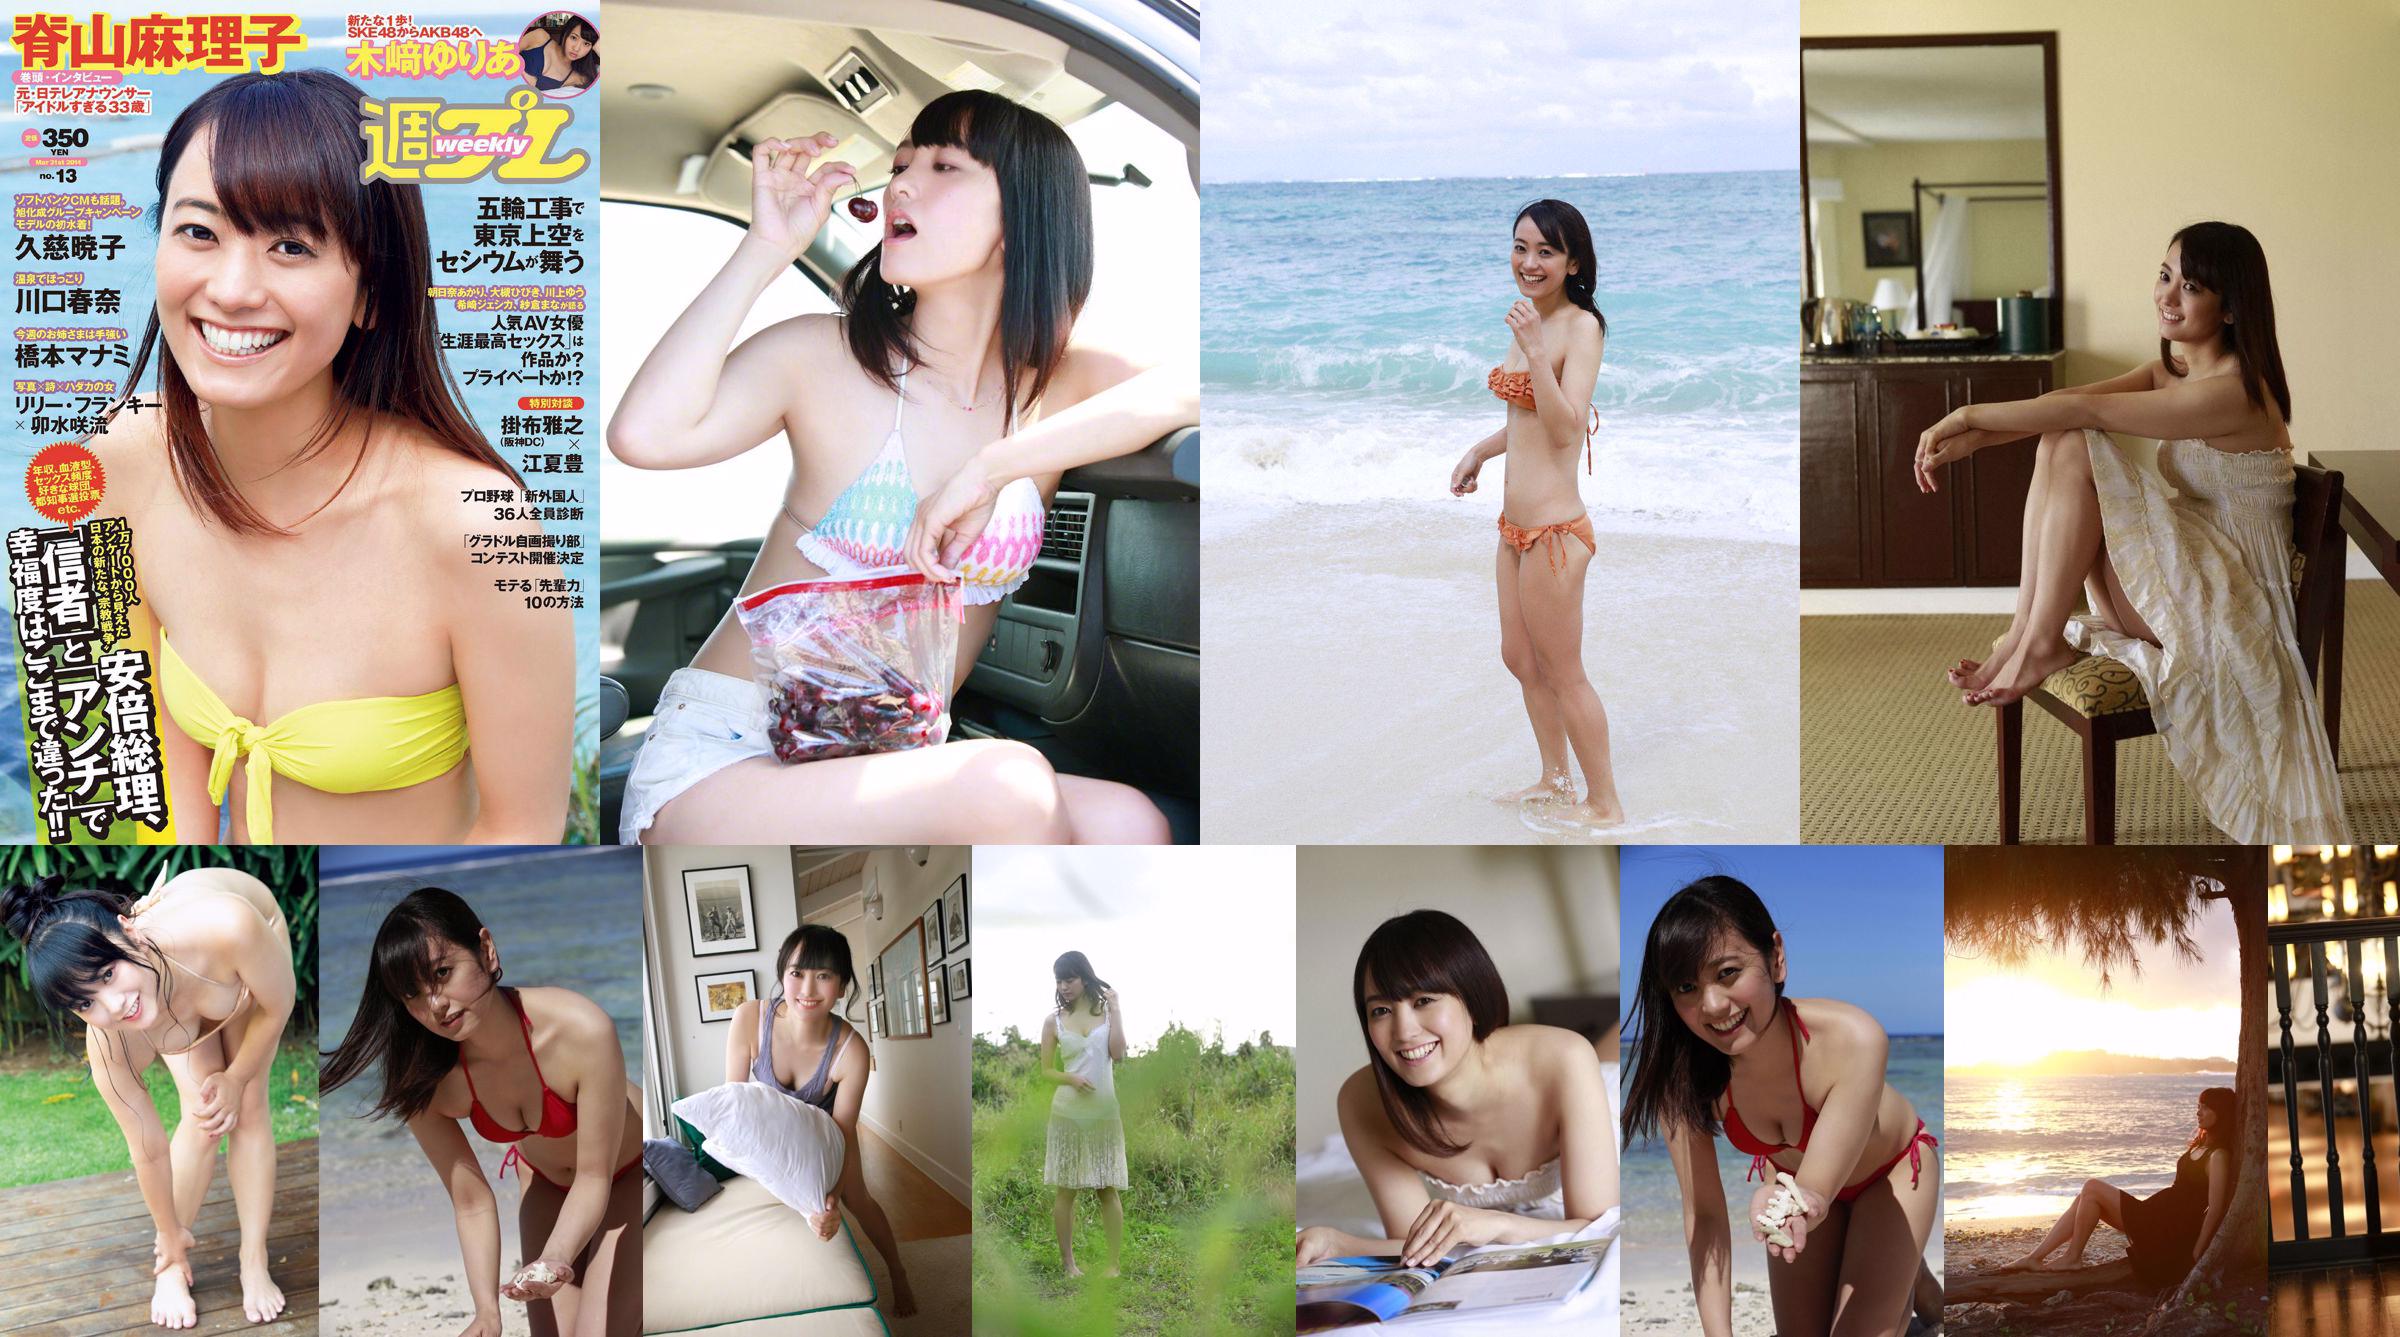 Sariyama Mariko "Aidaru 33 jaar" [WPB-net] No.165 No.6fd1de Pagina 33